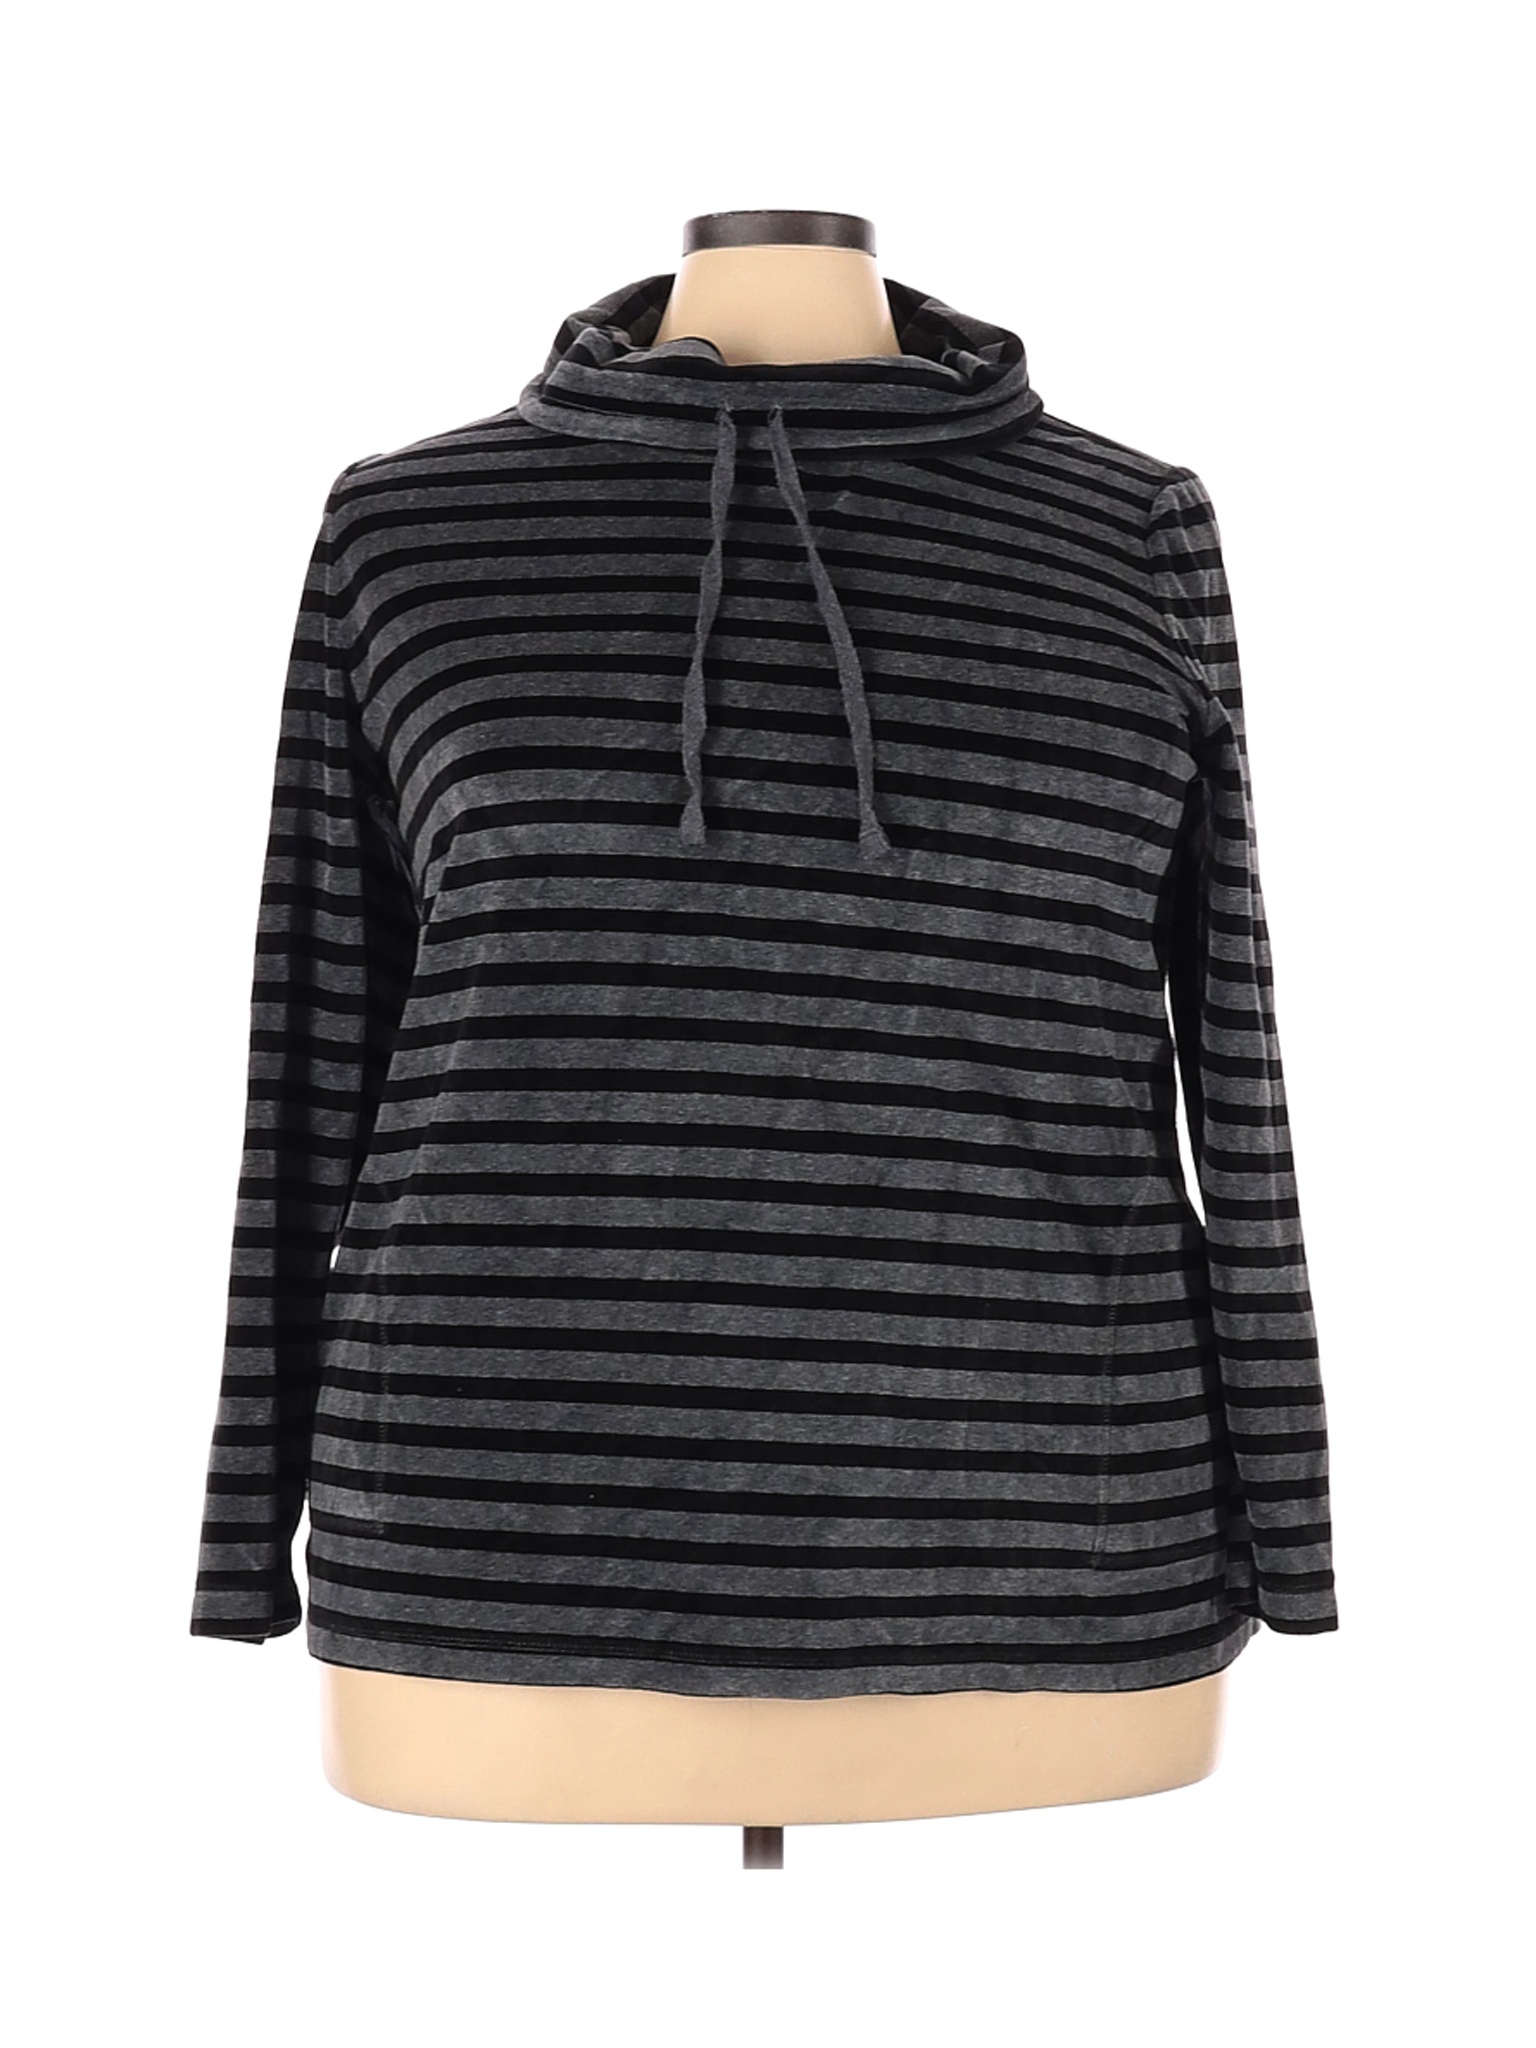 Talbots Women Black Turtleneck Sweater 2X Plus | eBay